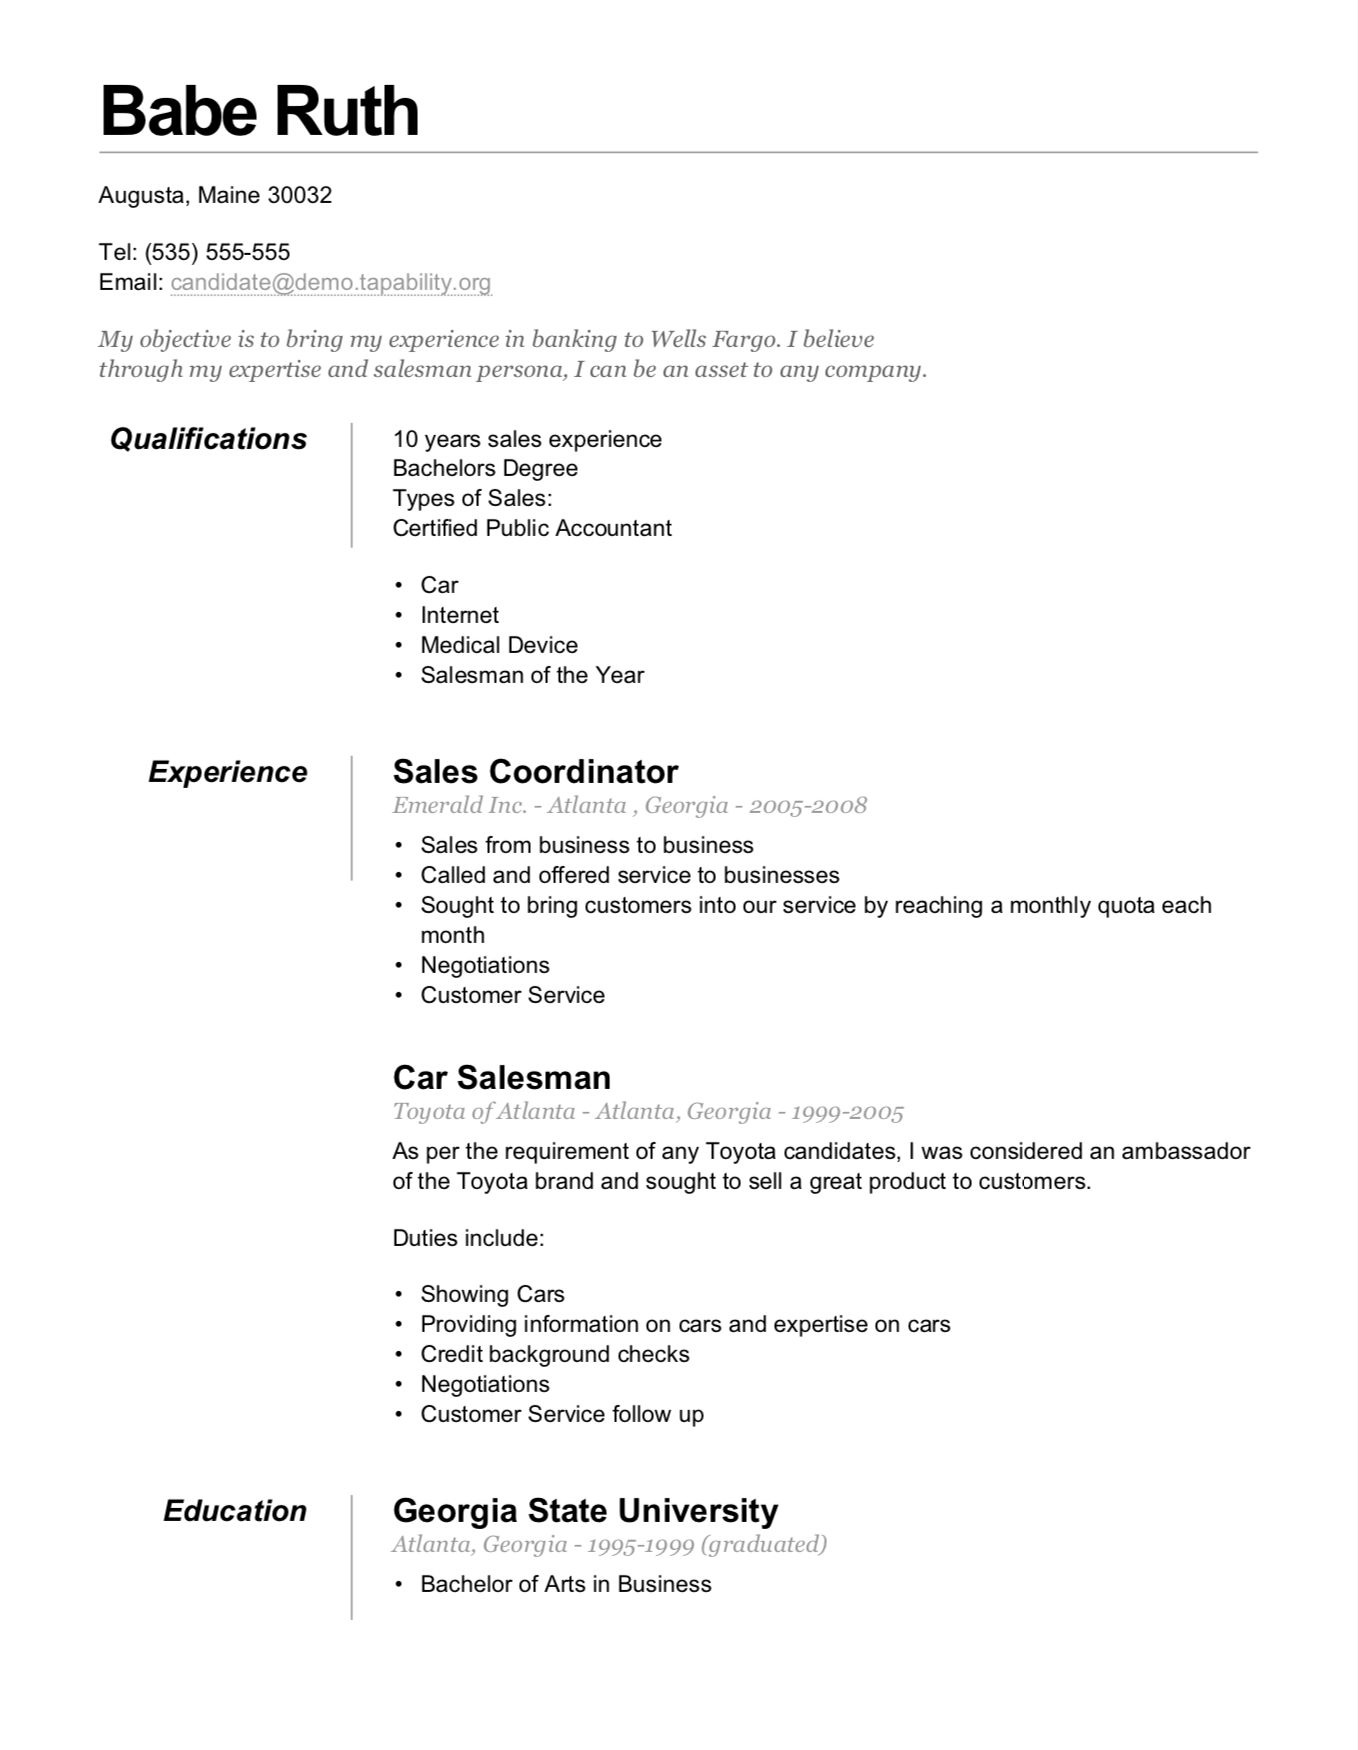 Example PDF Resume.